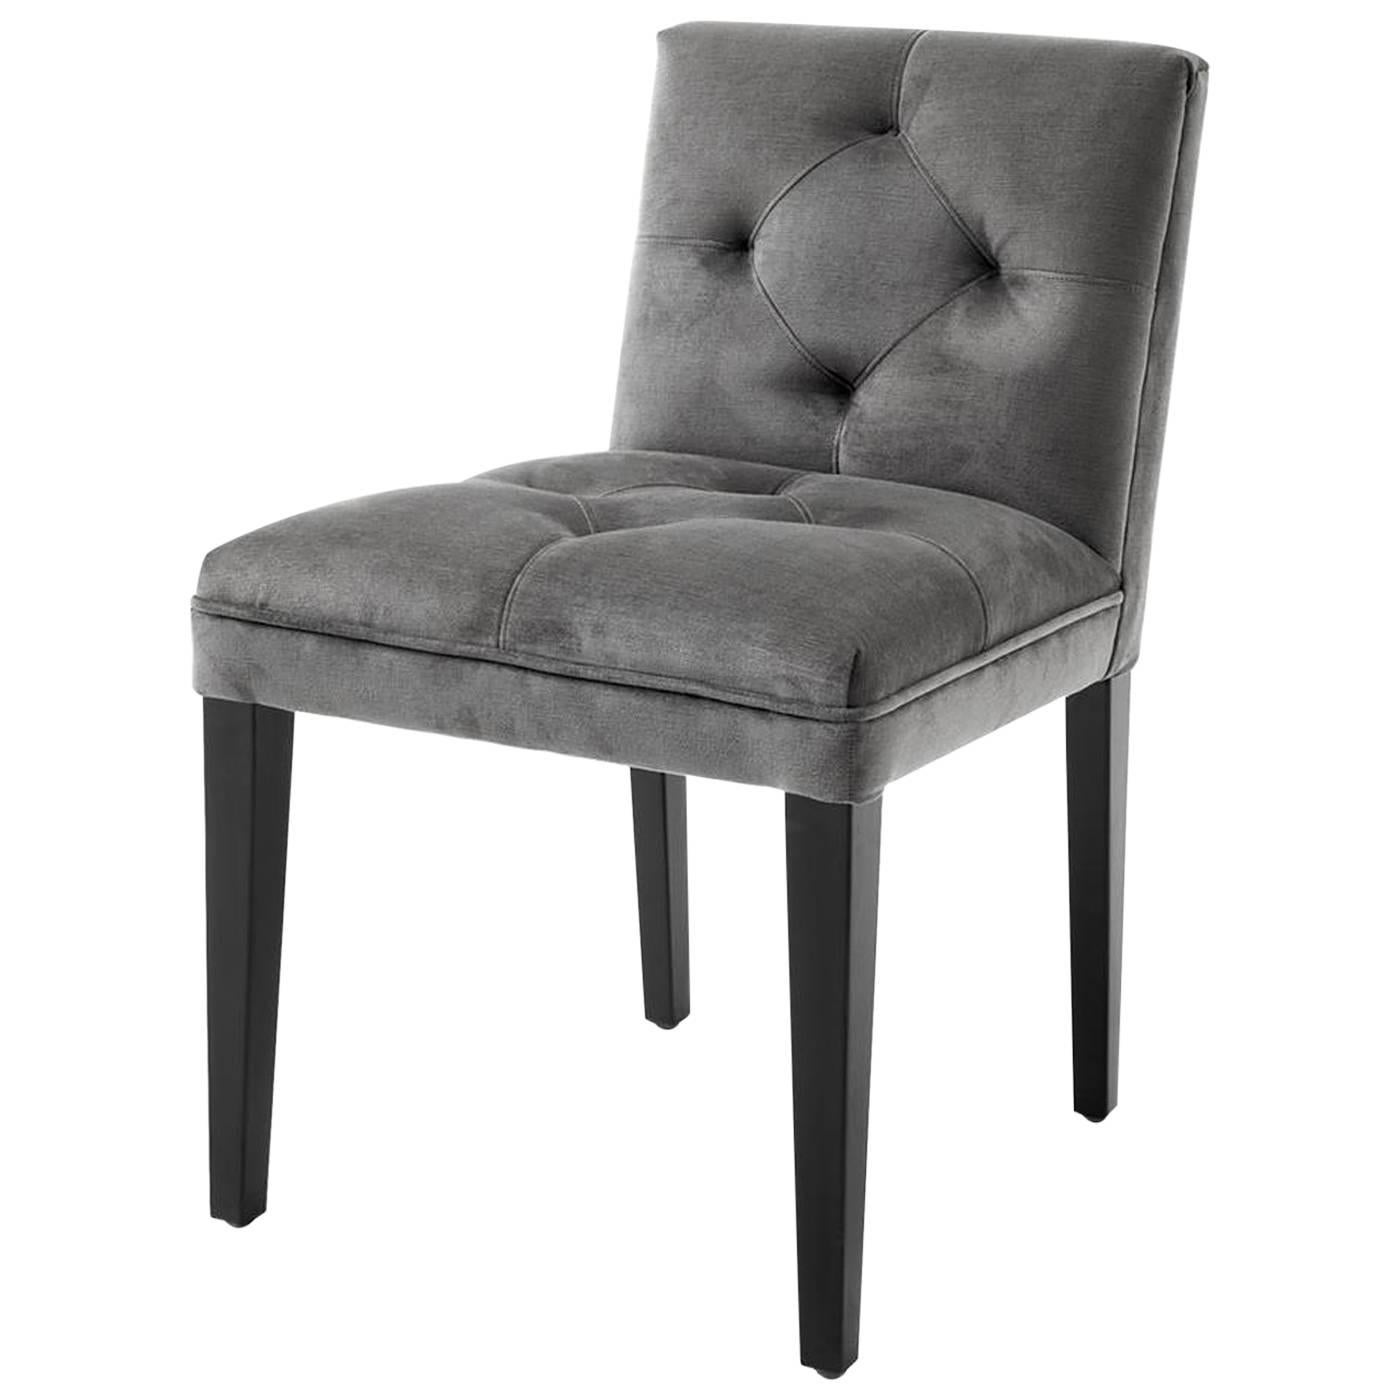 Grand Office Chair in Granite Grey or Pebble Grey Fabric